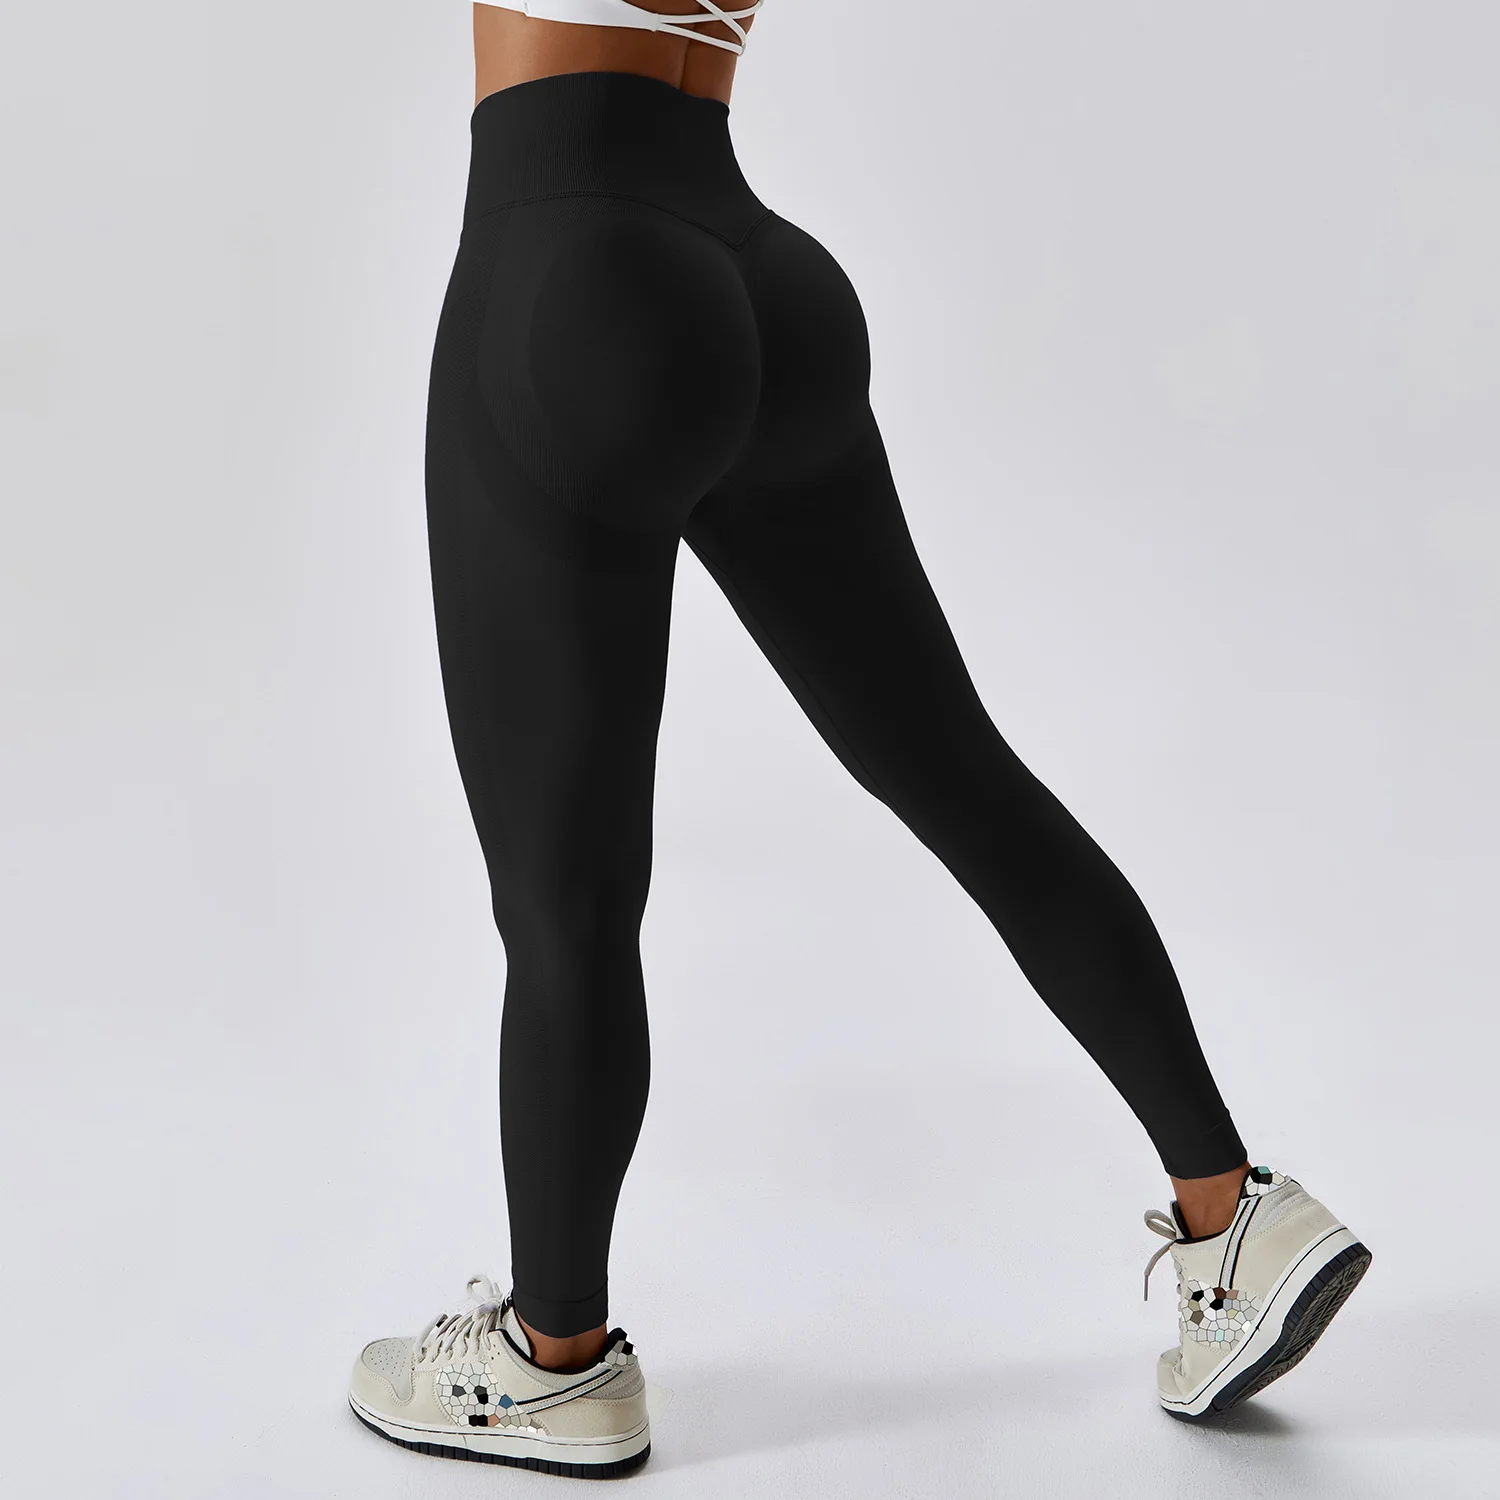 OEM Yoga Leggings Gym Sportswear Women Pants Workout Clothing Fitness Active Sports High Waist Scrunch Seamless Leggings